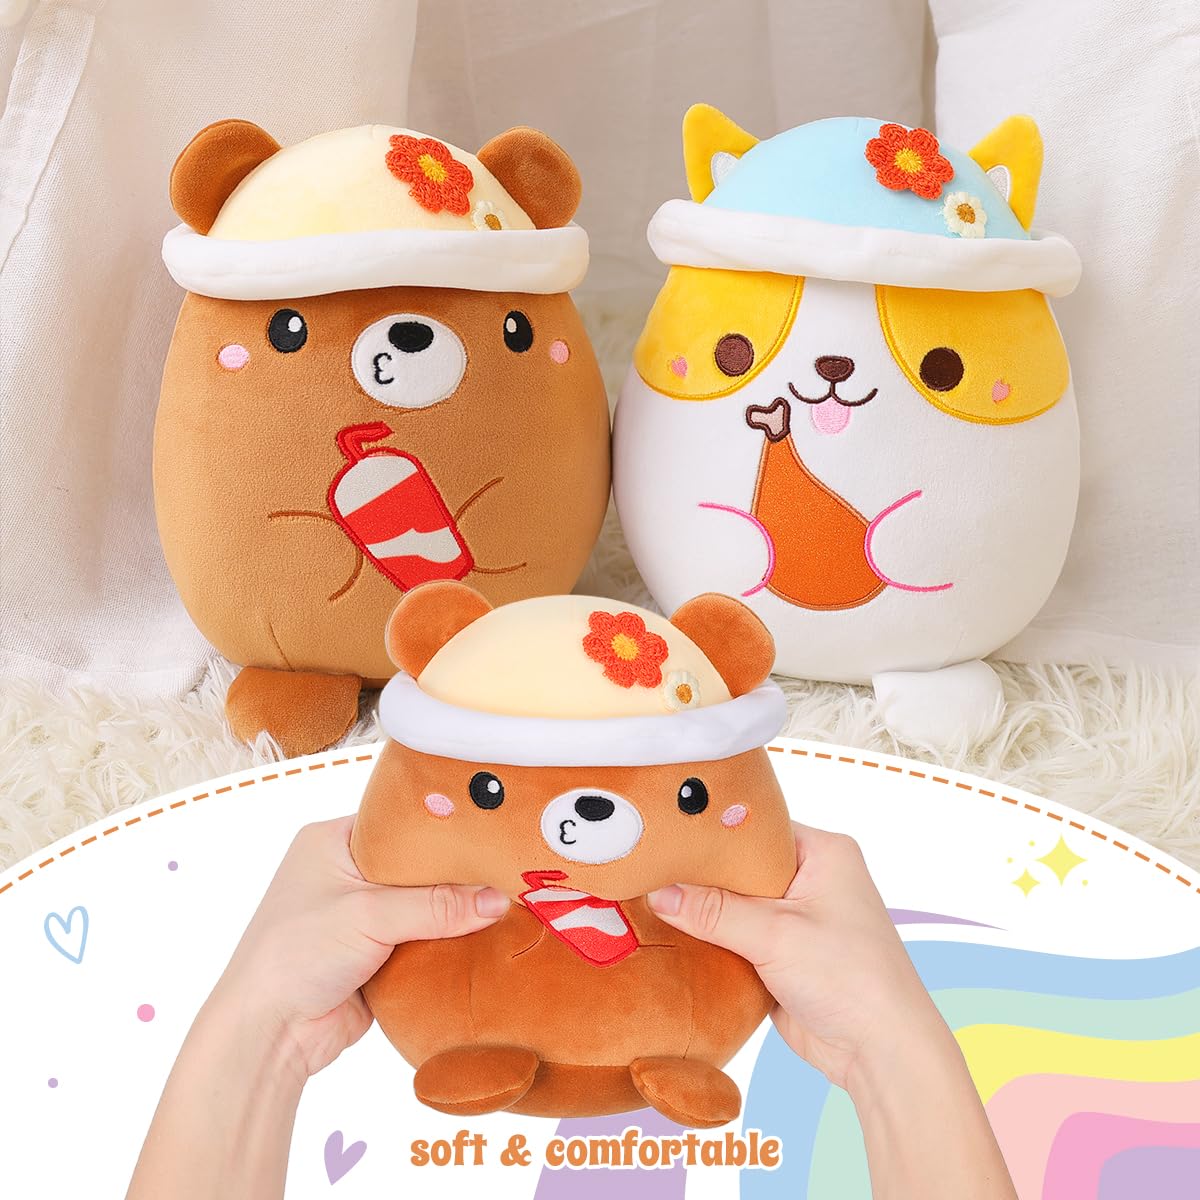 20 CM / 8 inch Cute Brown Bear Plush Pillow Stuffed Animal, Soft Kawaii Bear Plush Toy with Hat Clothing Children's Gift